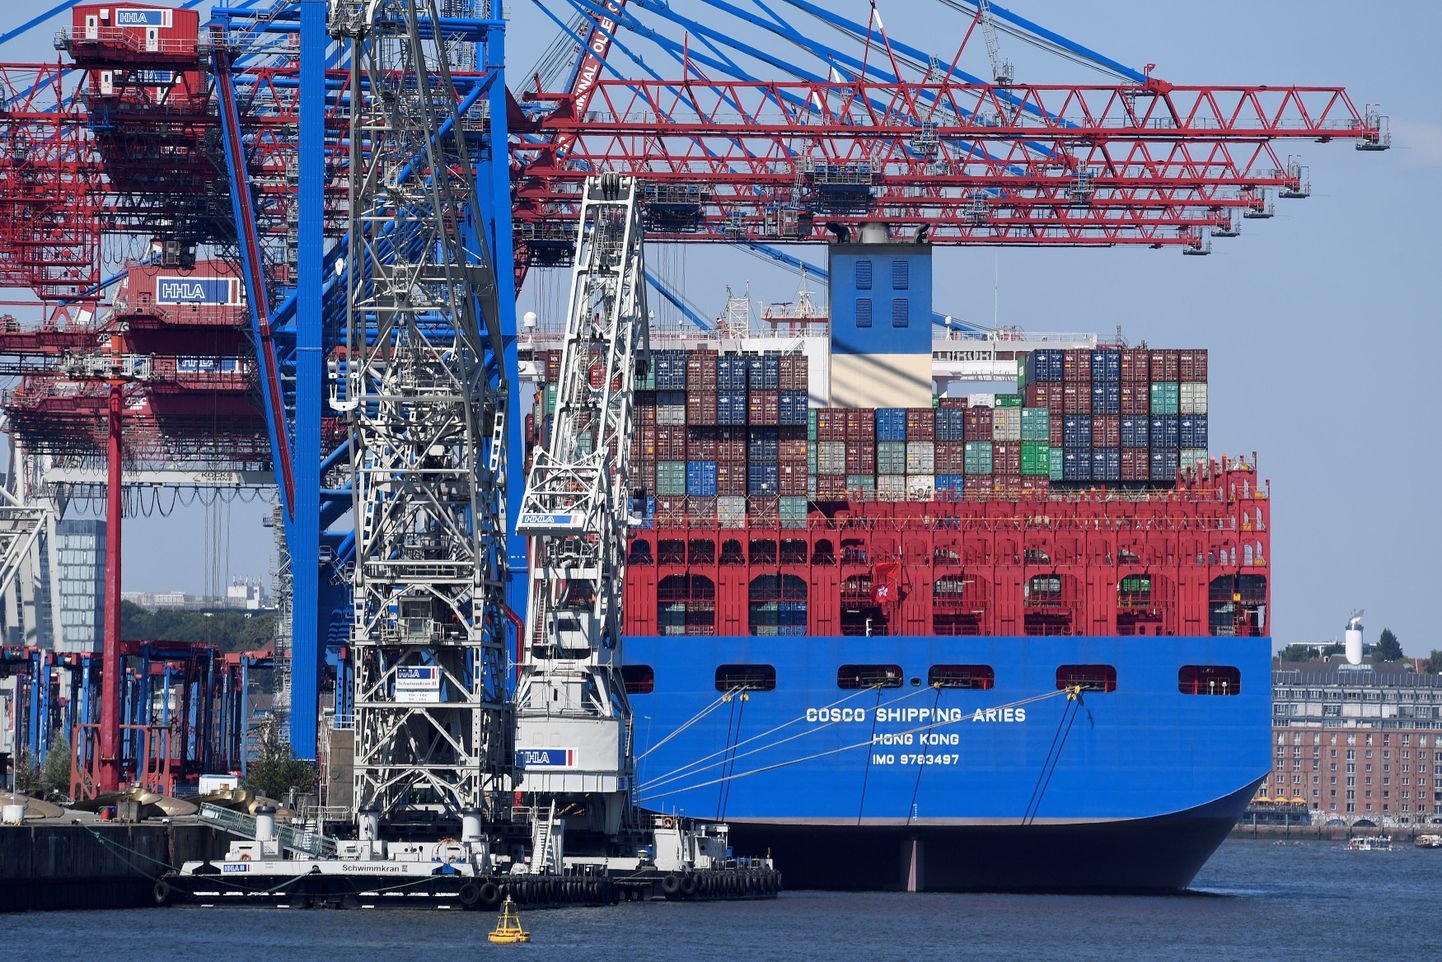 Hiina kontenerlaev Cosco Shipping Aries Hamburgi sadamas.